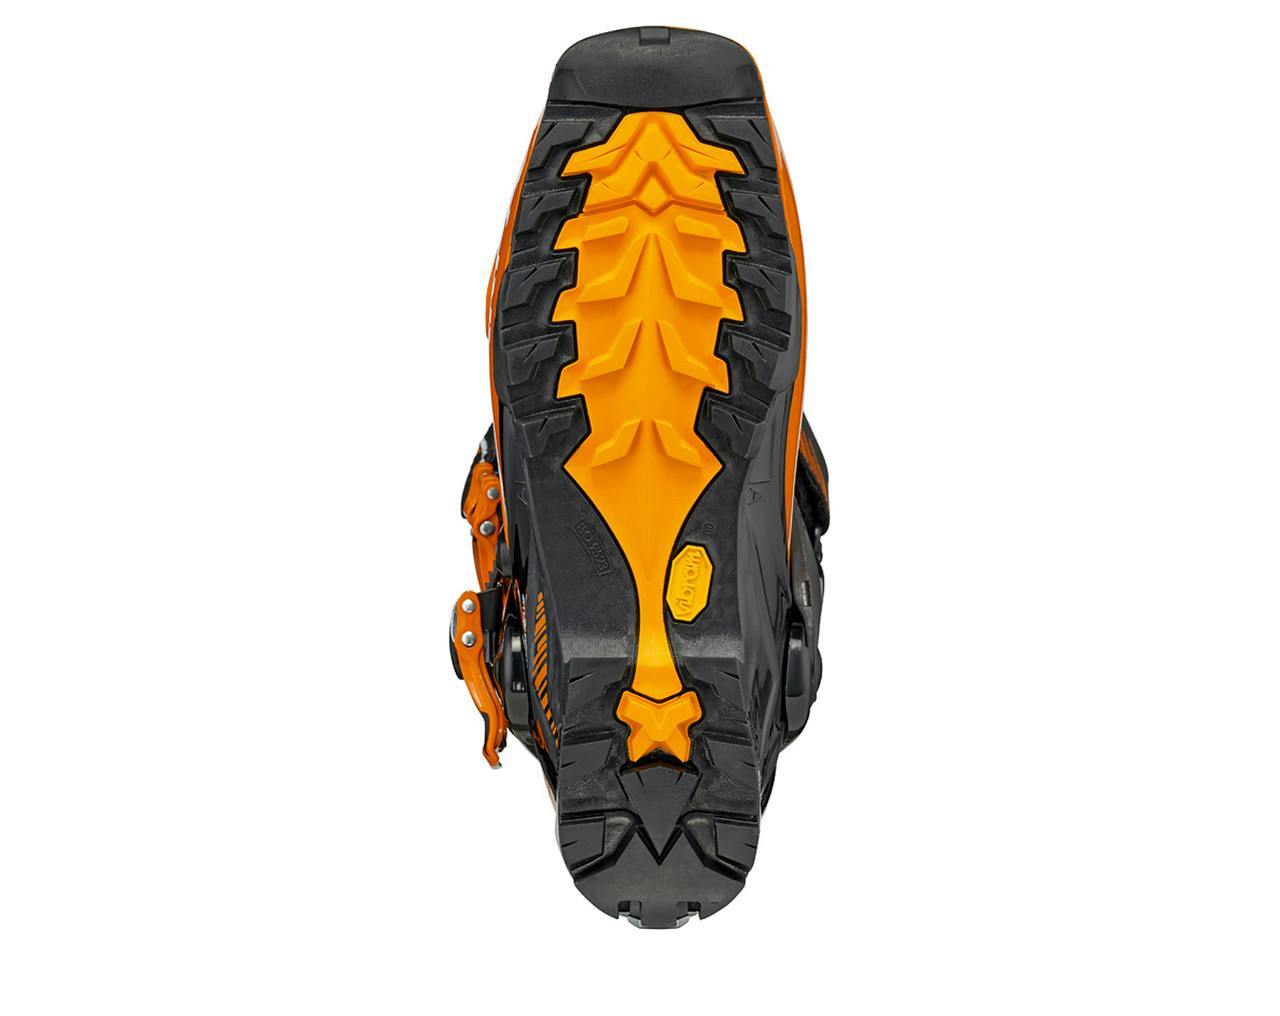 Maestrale Ski Boots Black/Orange